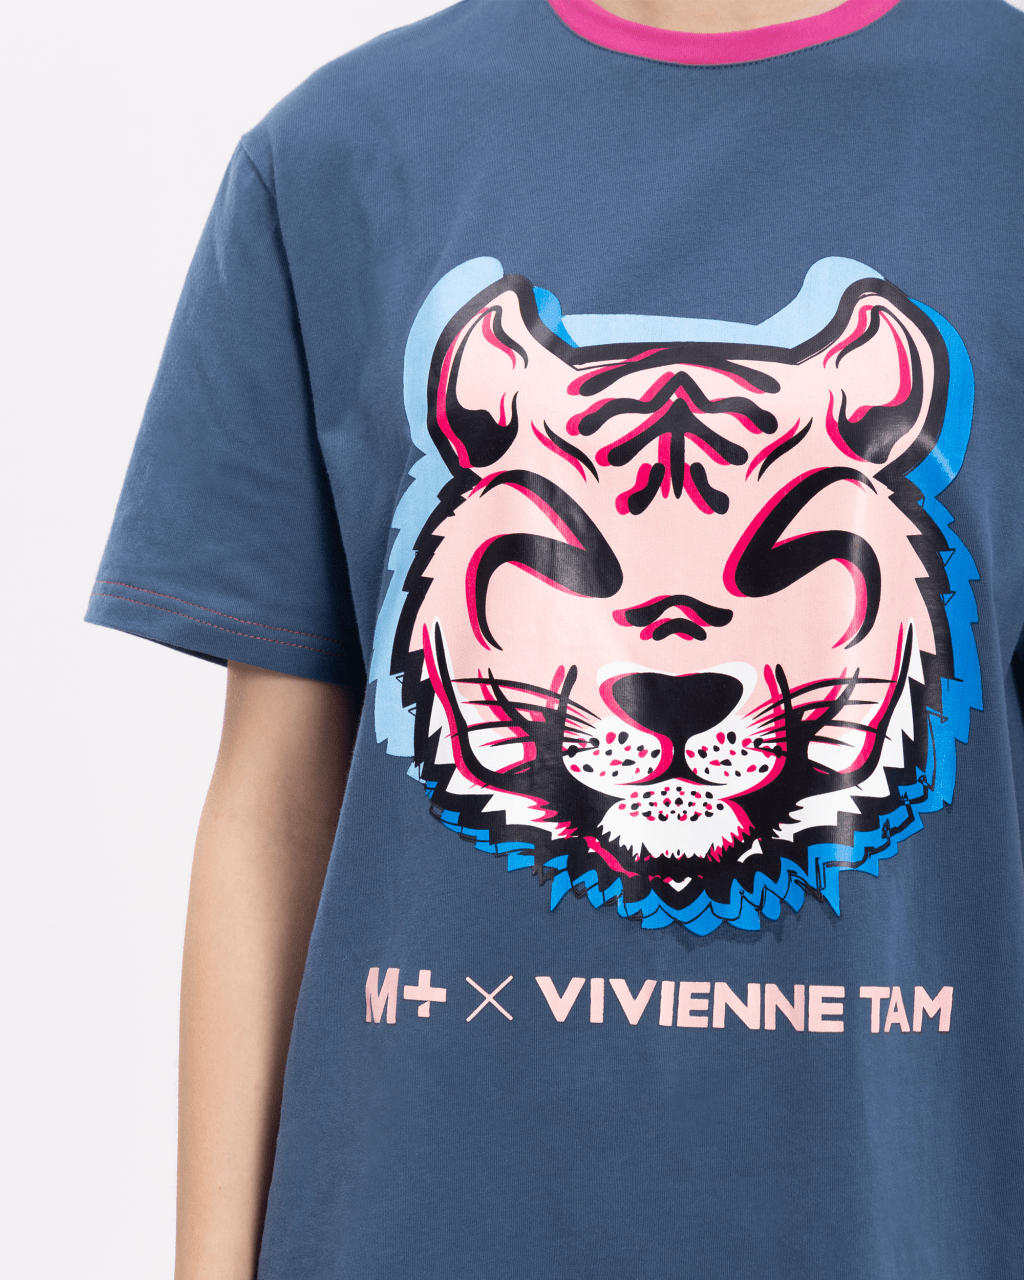 Vivienne Tam 「普普藝虎」 藍色T恤/$590。